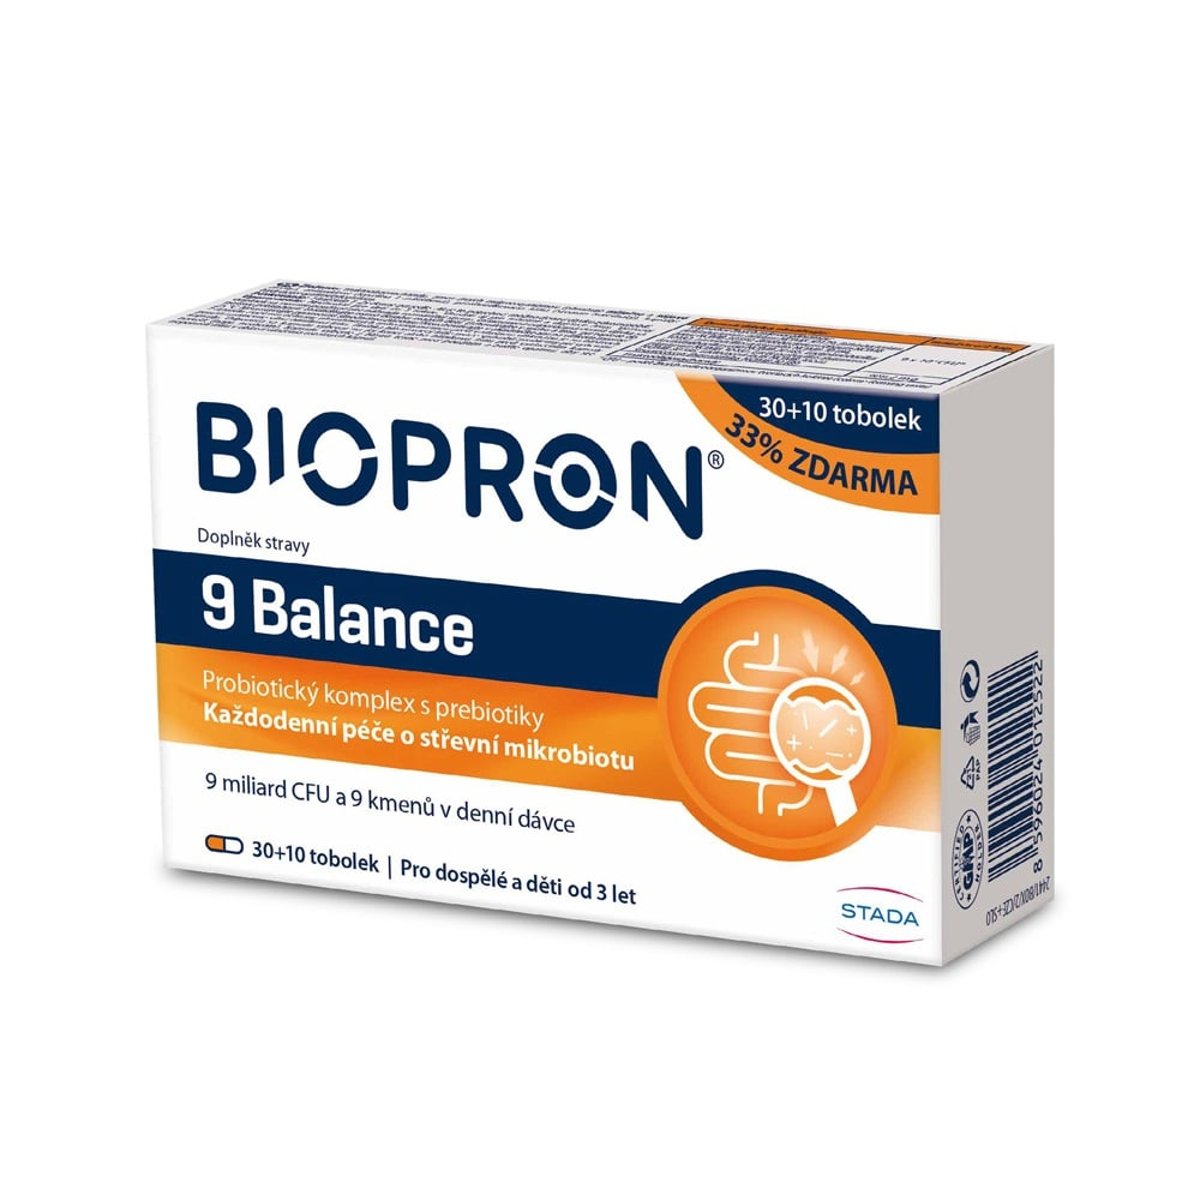 Biopron 9 tob.30+10